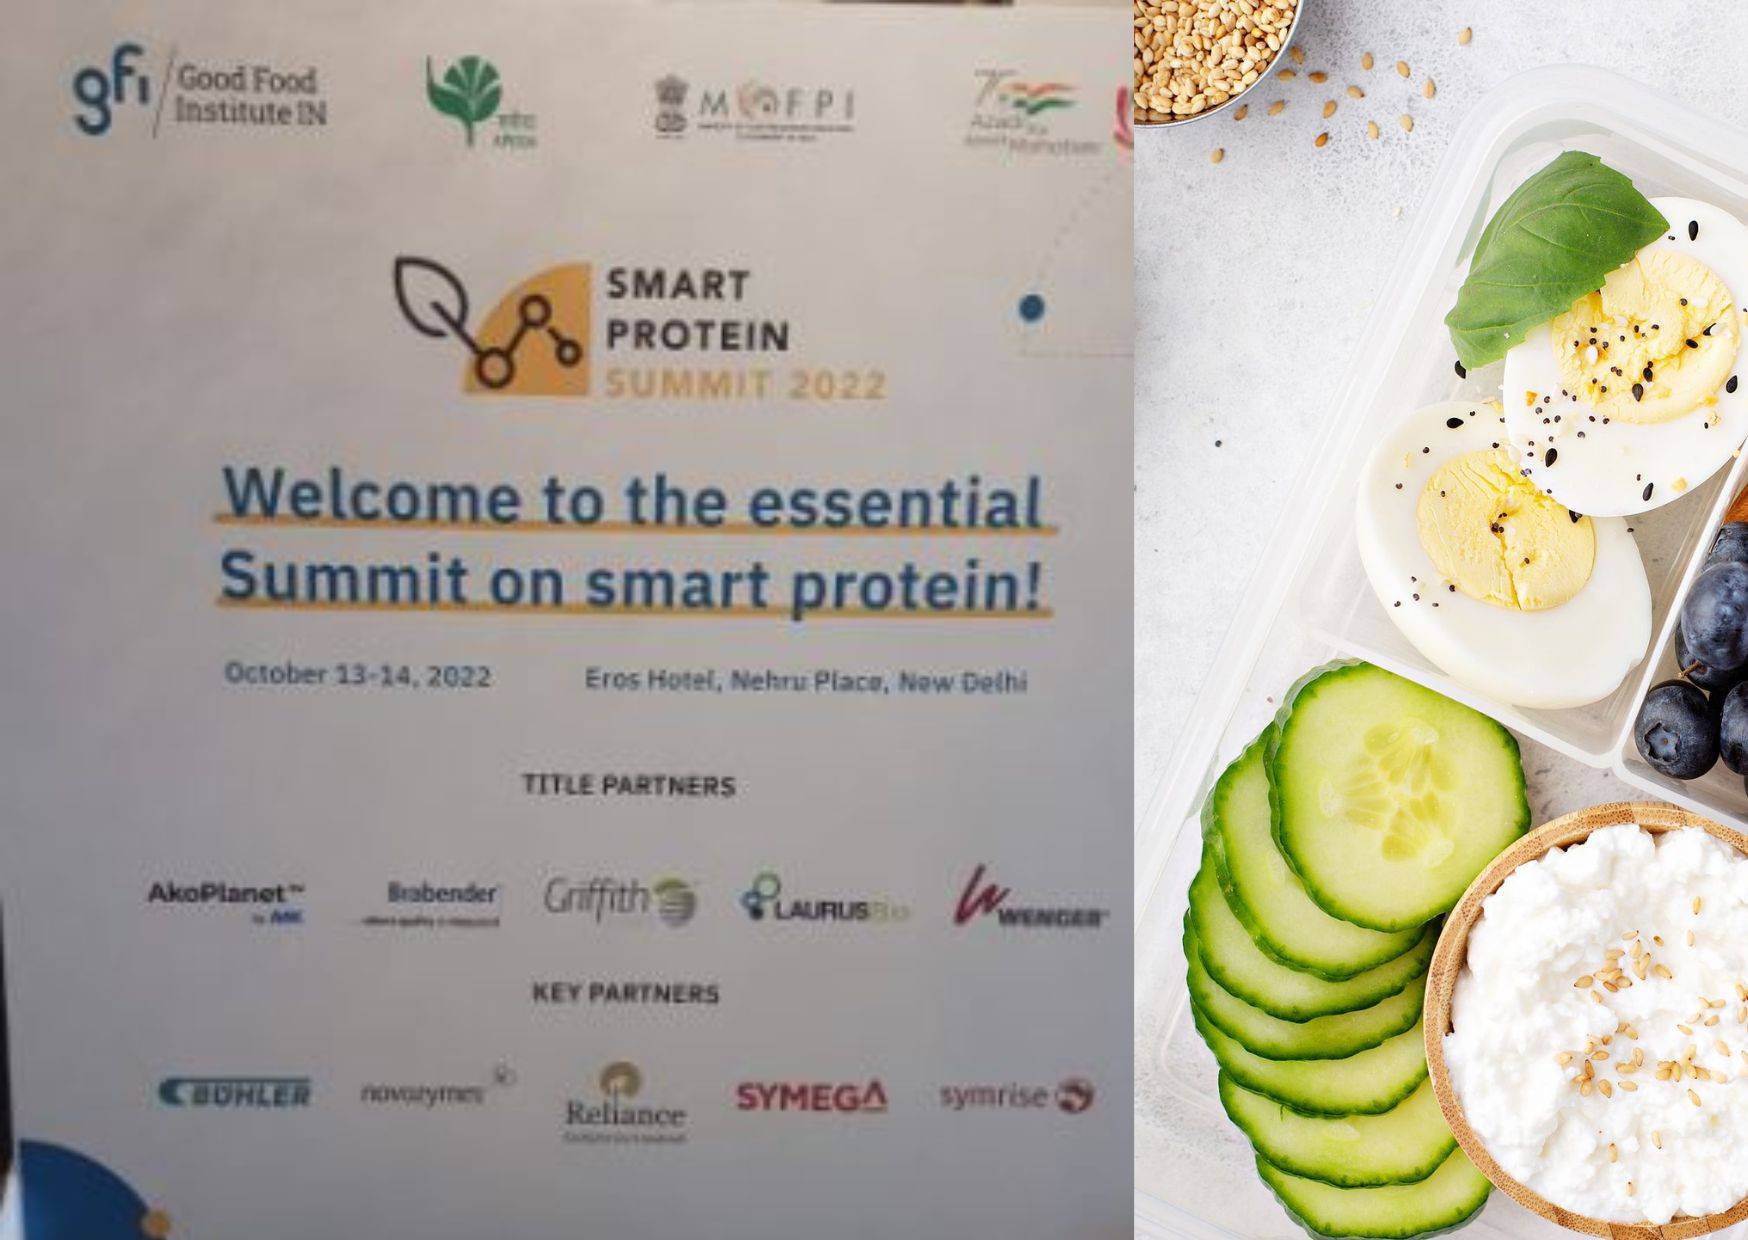 The Smart Protein Summit 2022 starts at new delhi